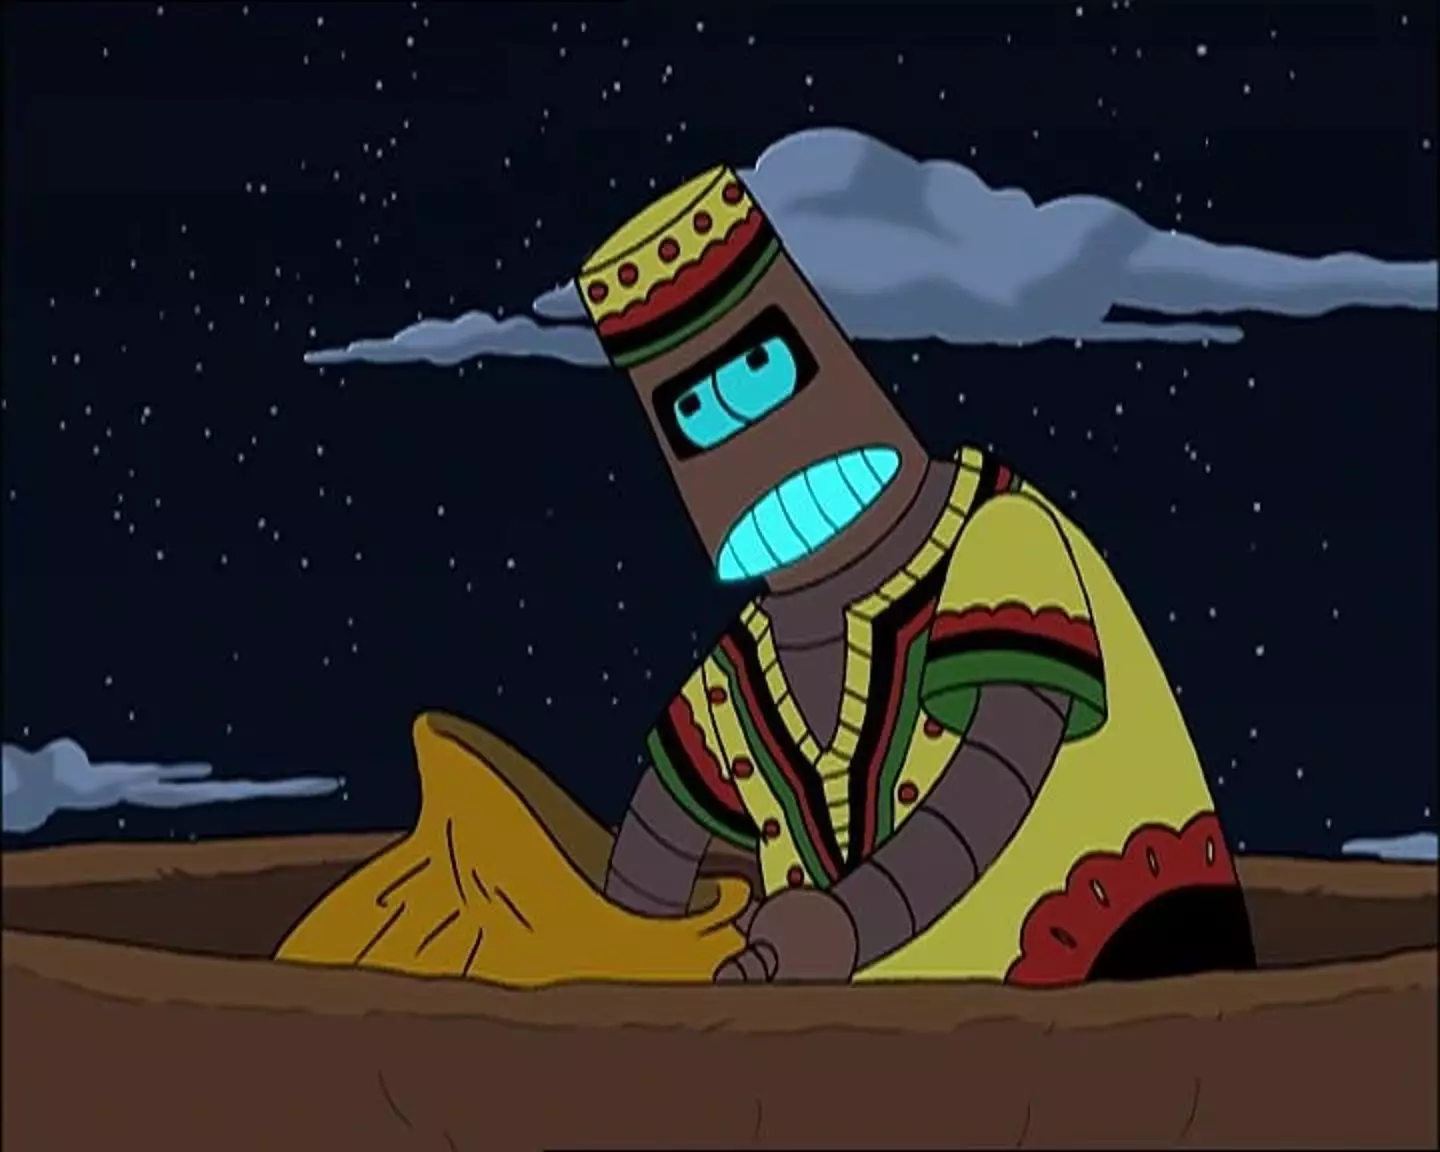 Coolio played the Kwanzaa-bot in three episodes of Futurama.